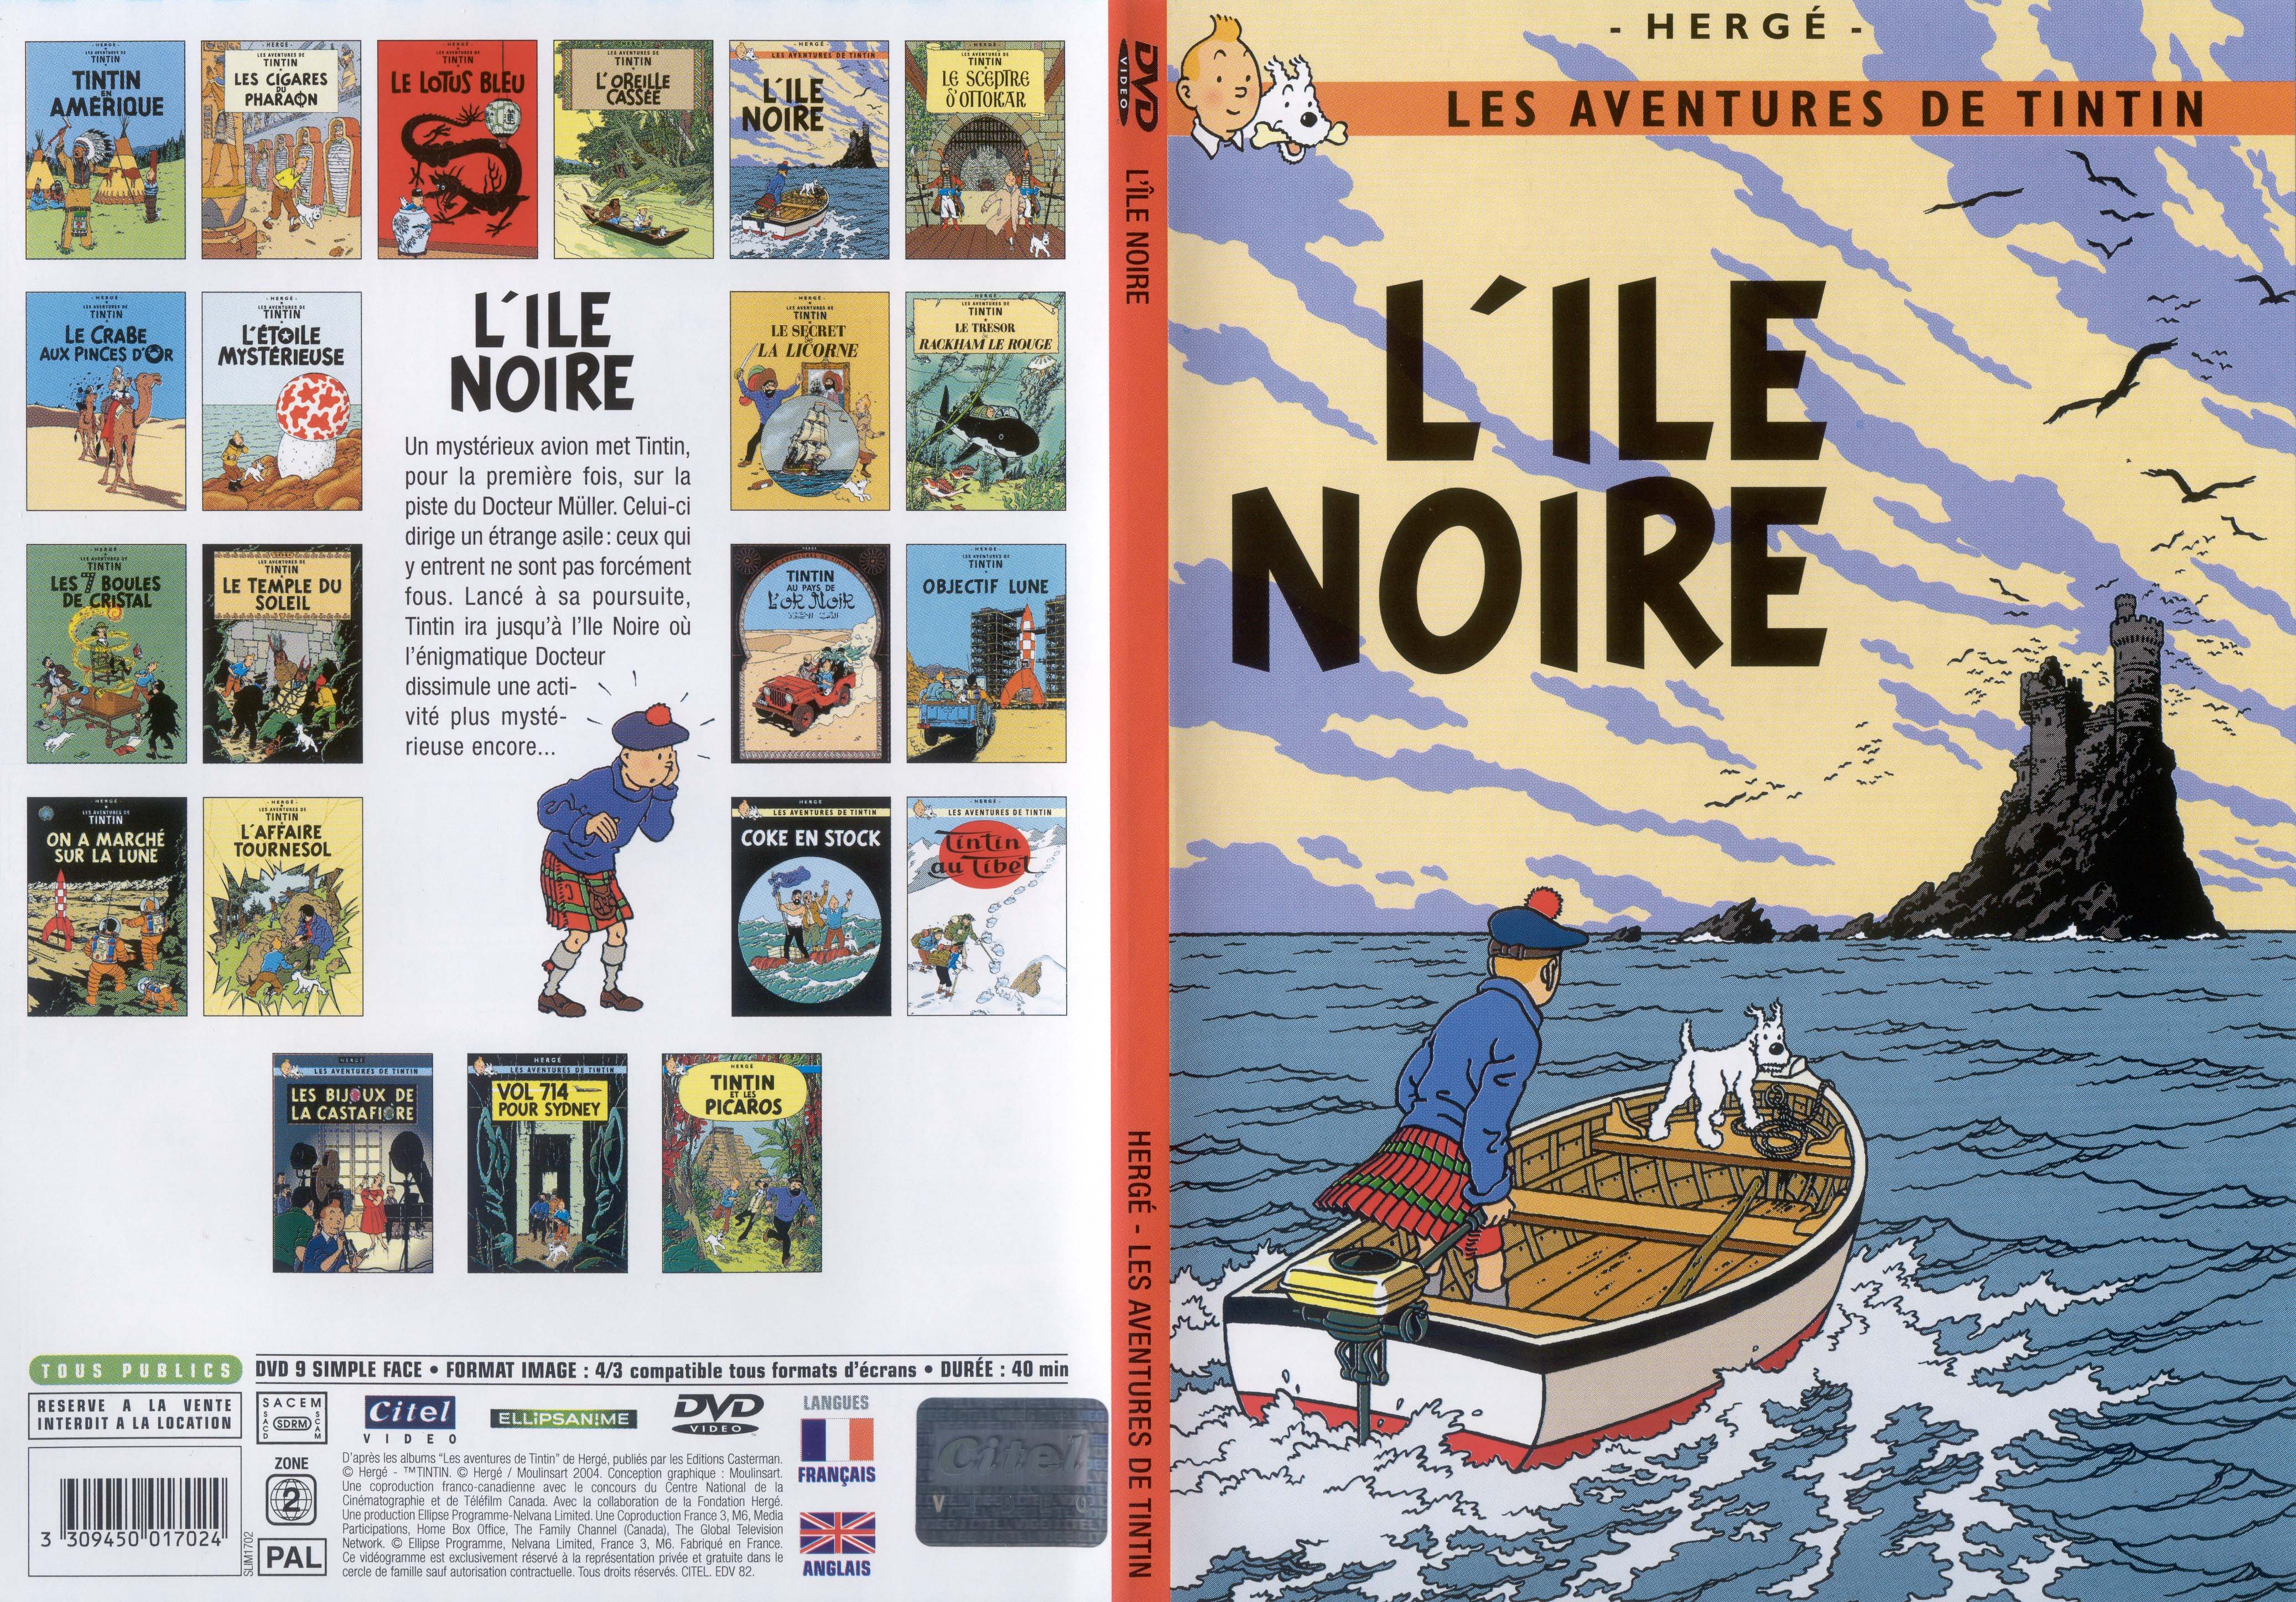 Jaquette DVD Tintin - L